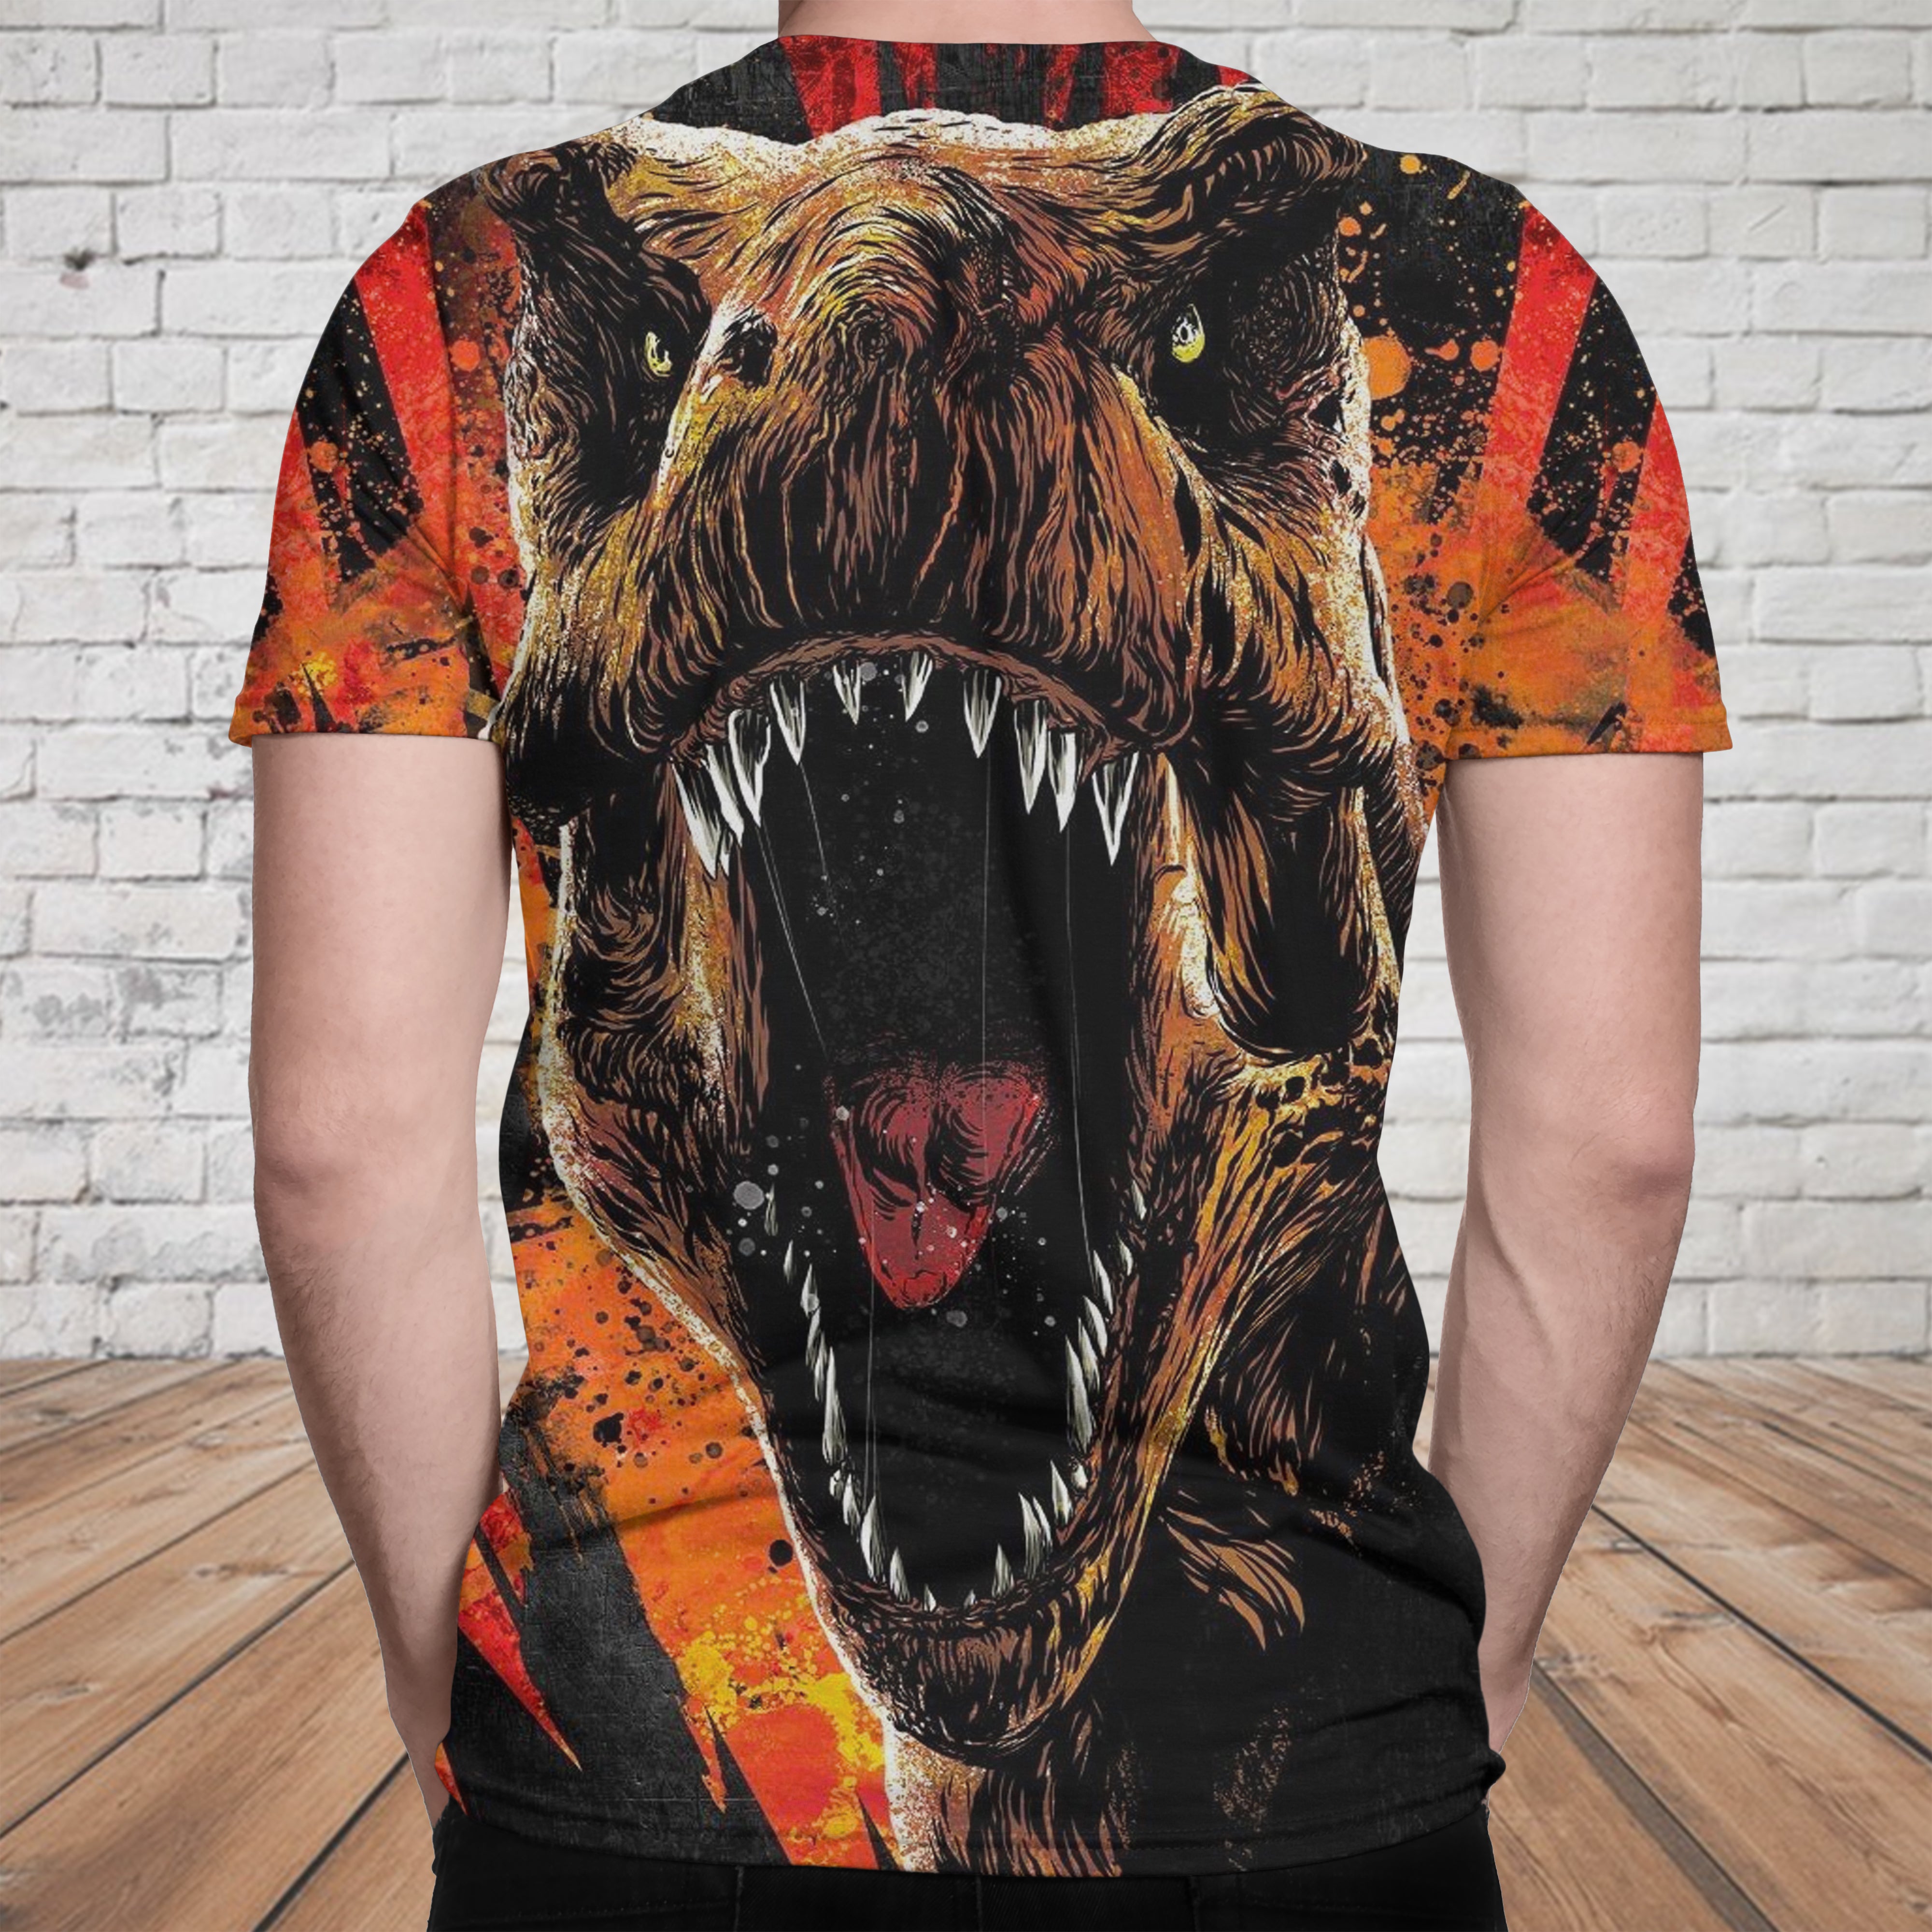 Tyrannosaurus Rex 3D T-Shirt 06308